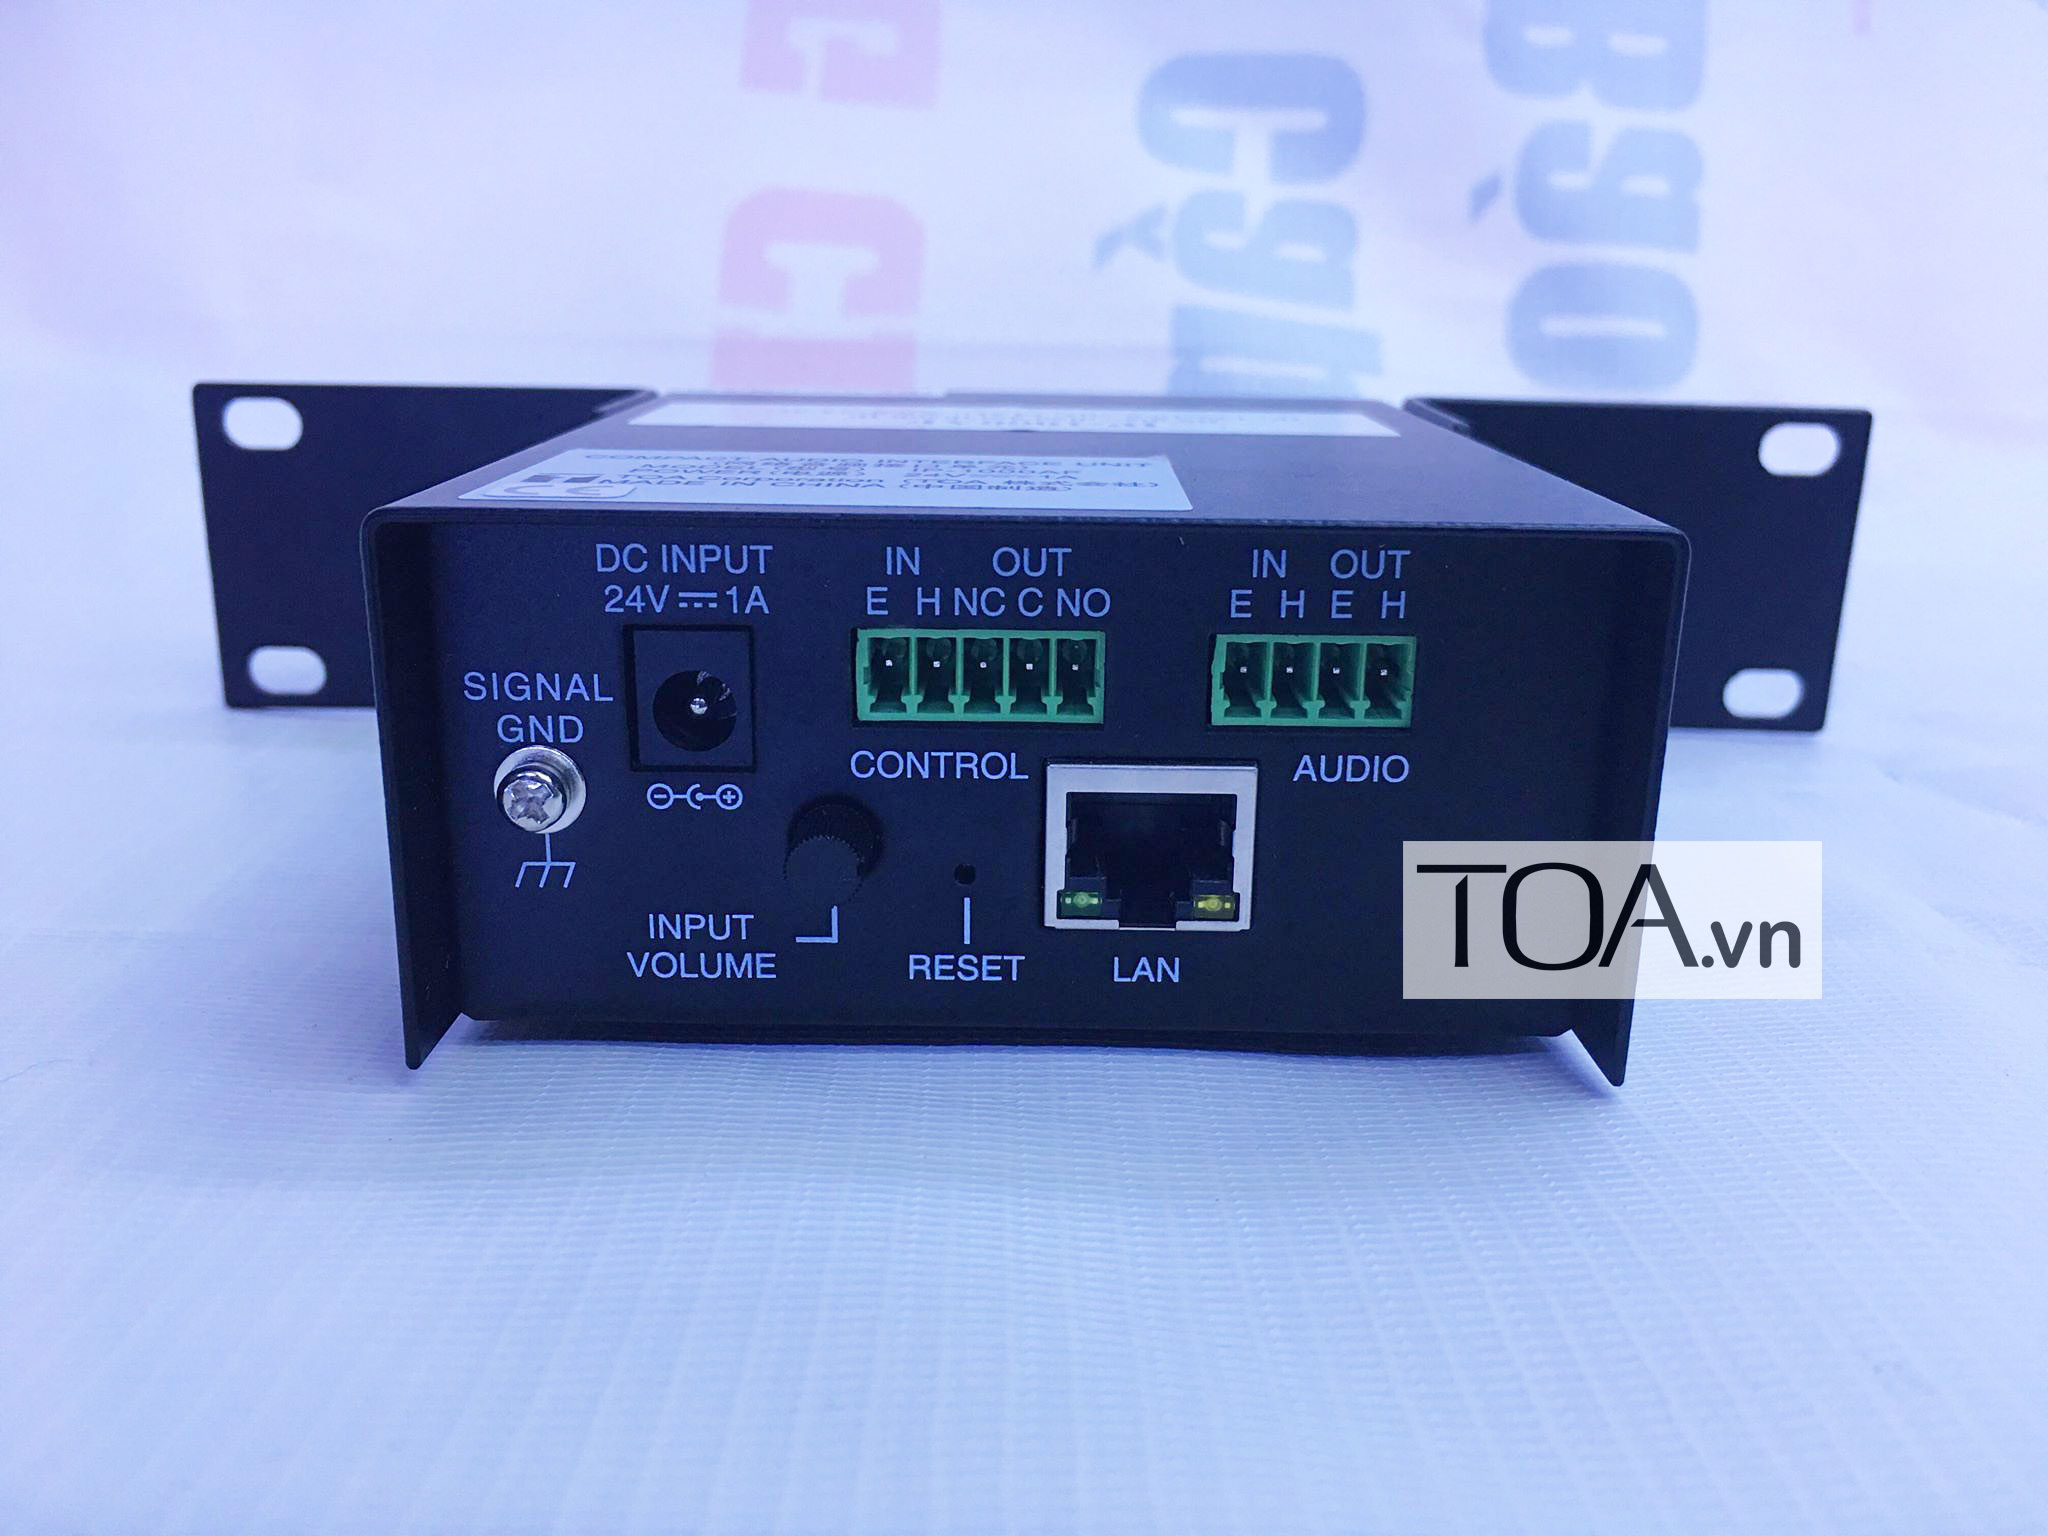 Bộ giao diện âm thanh IP TOA IP-1000AF | TOA IP-1000AF